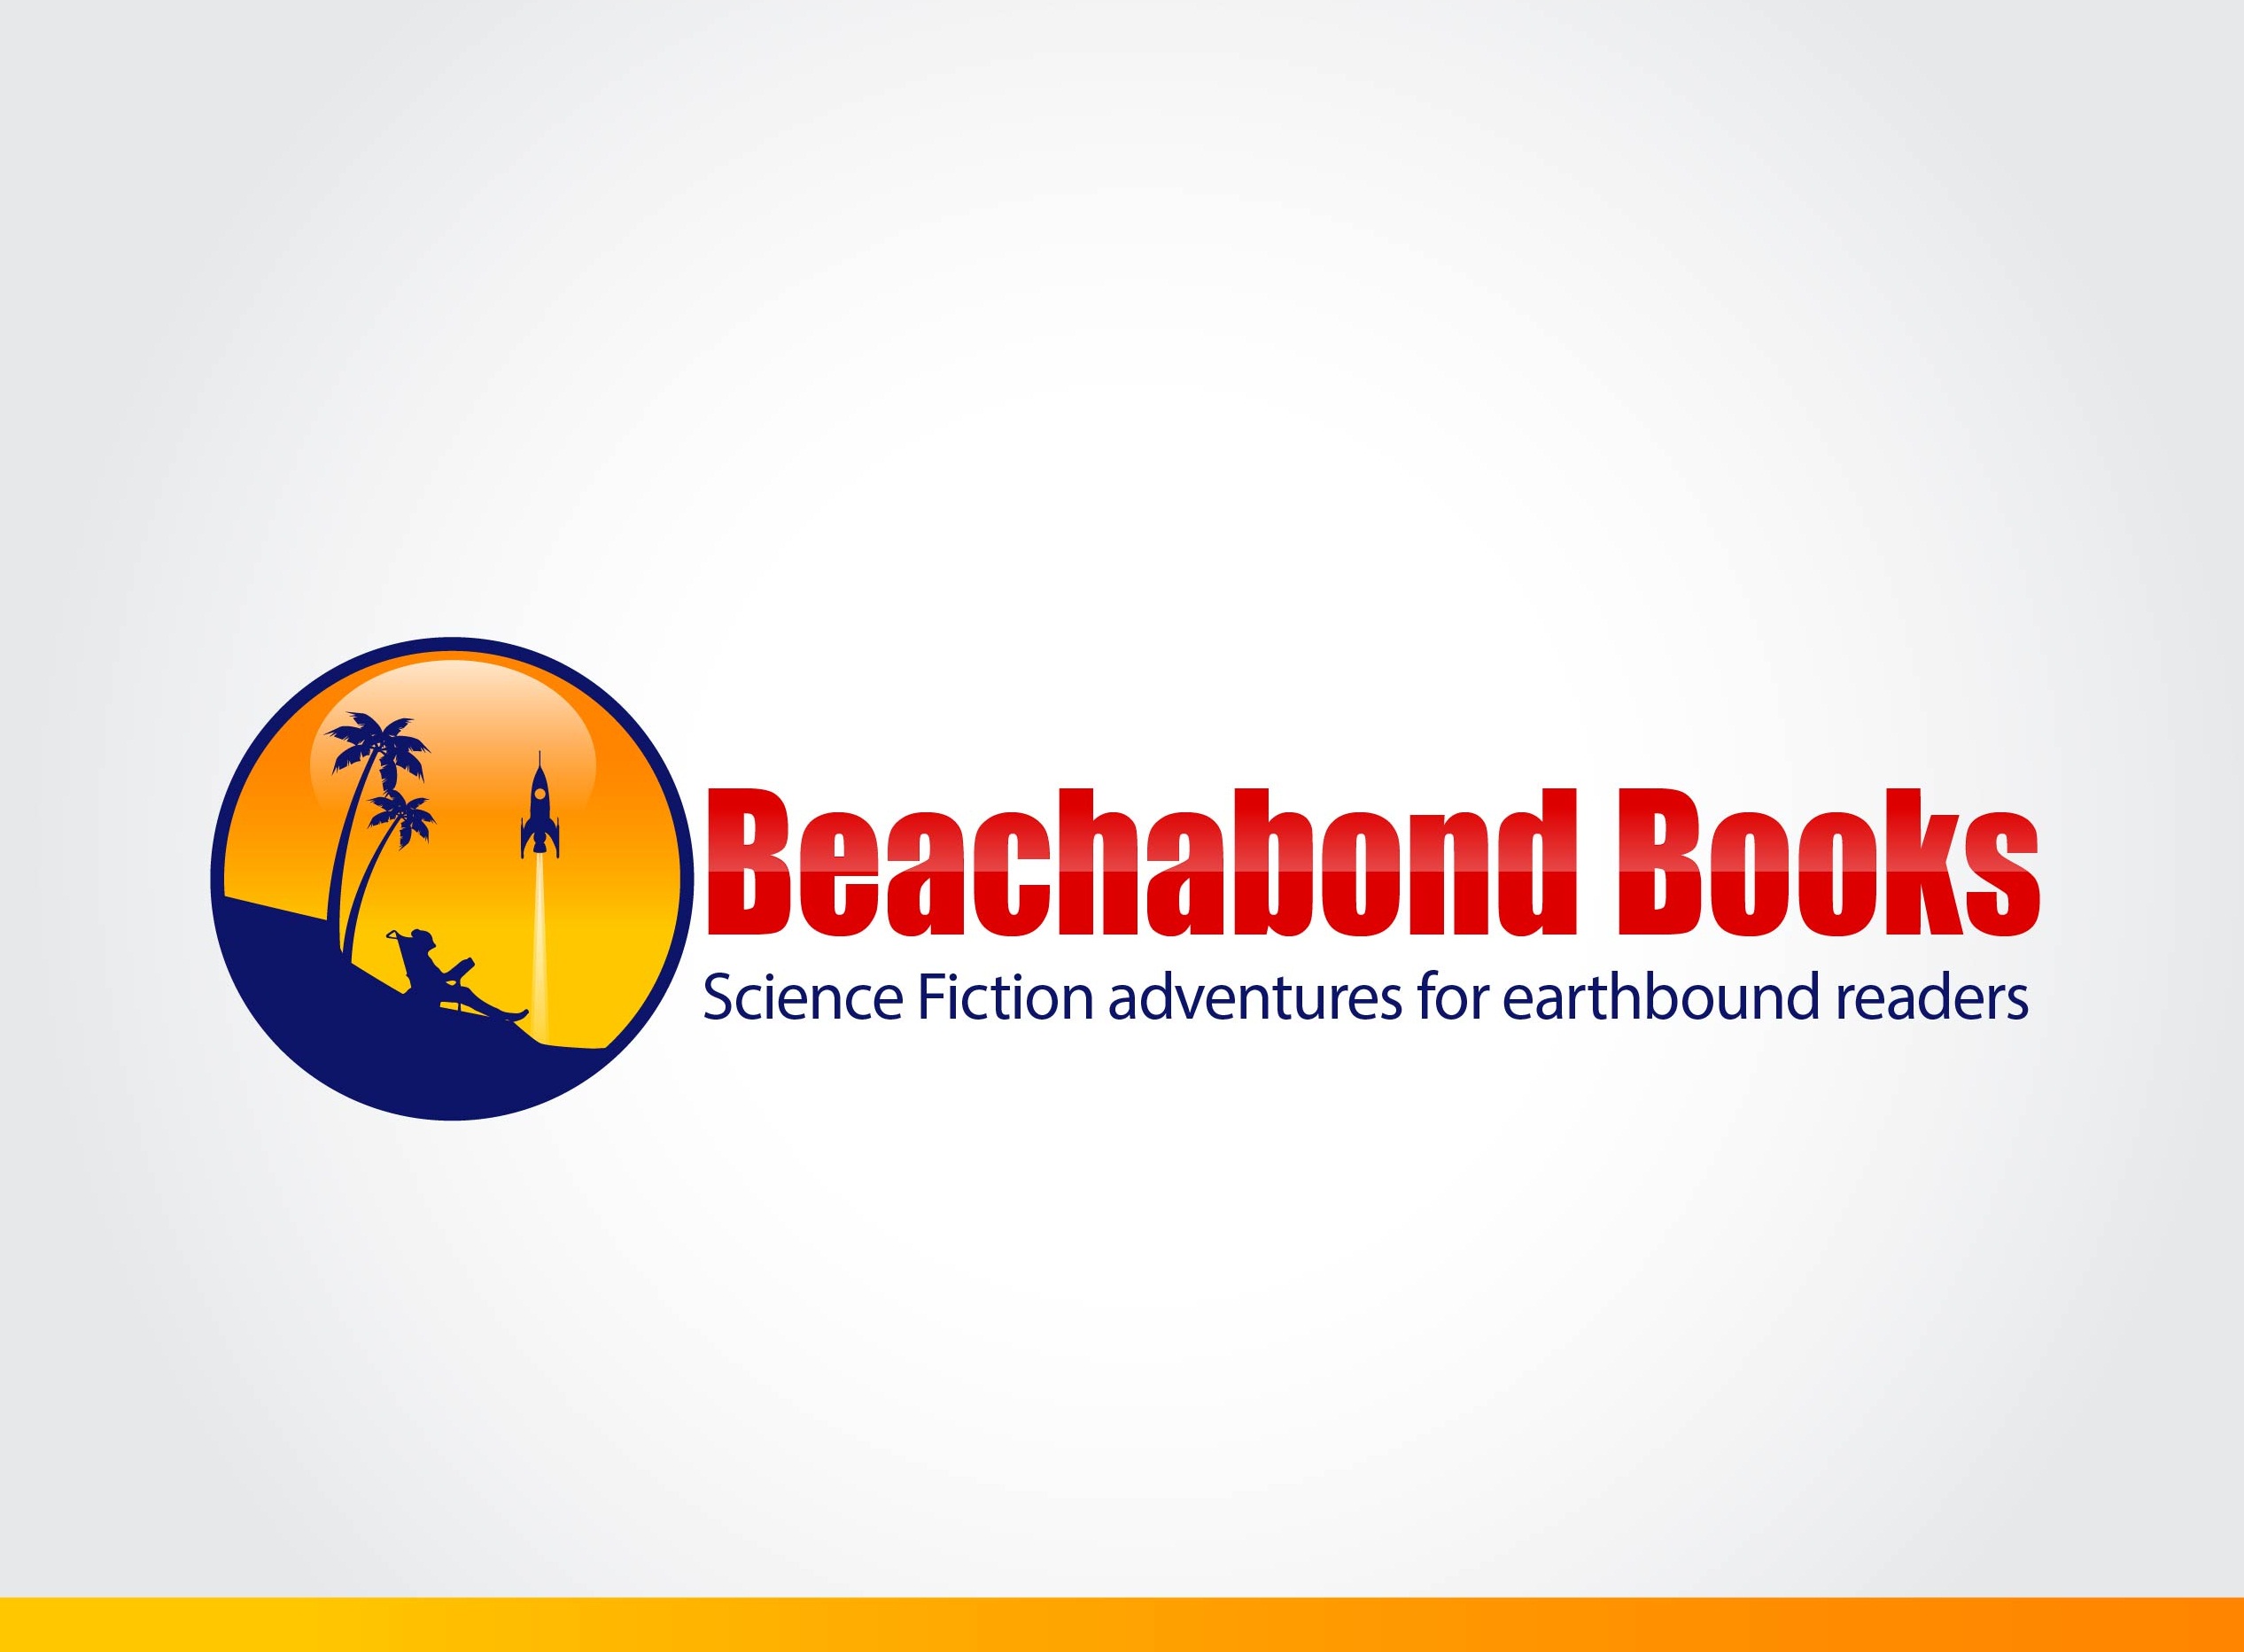 Beachabond-Books